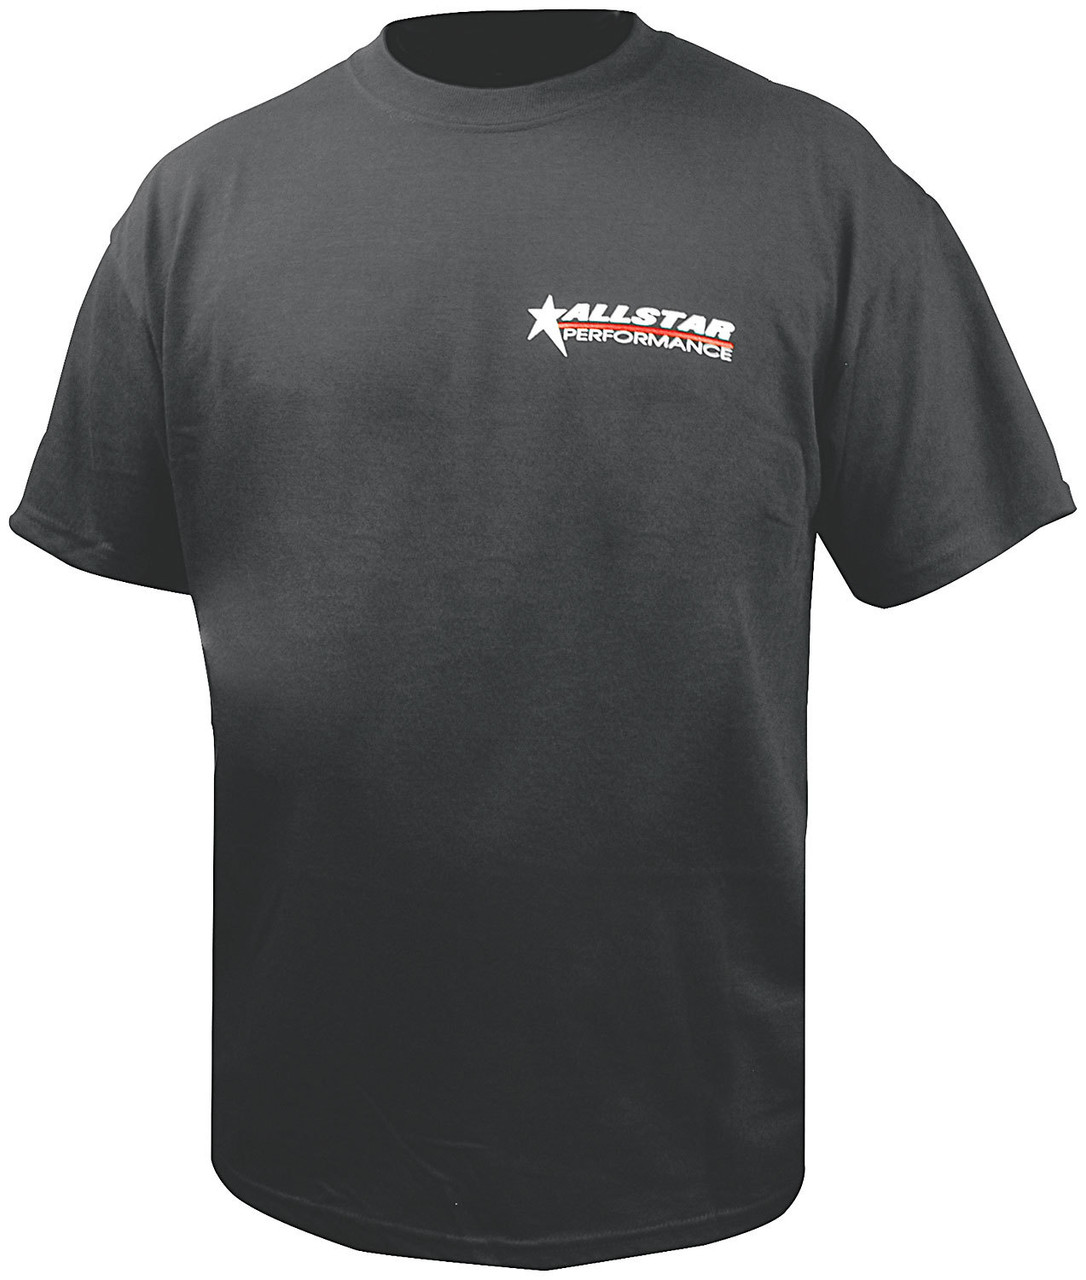 Allstar T-Shirt Charcoal XX-Large